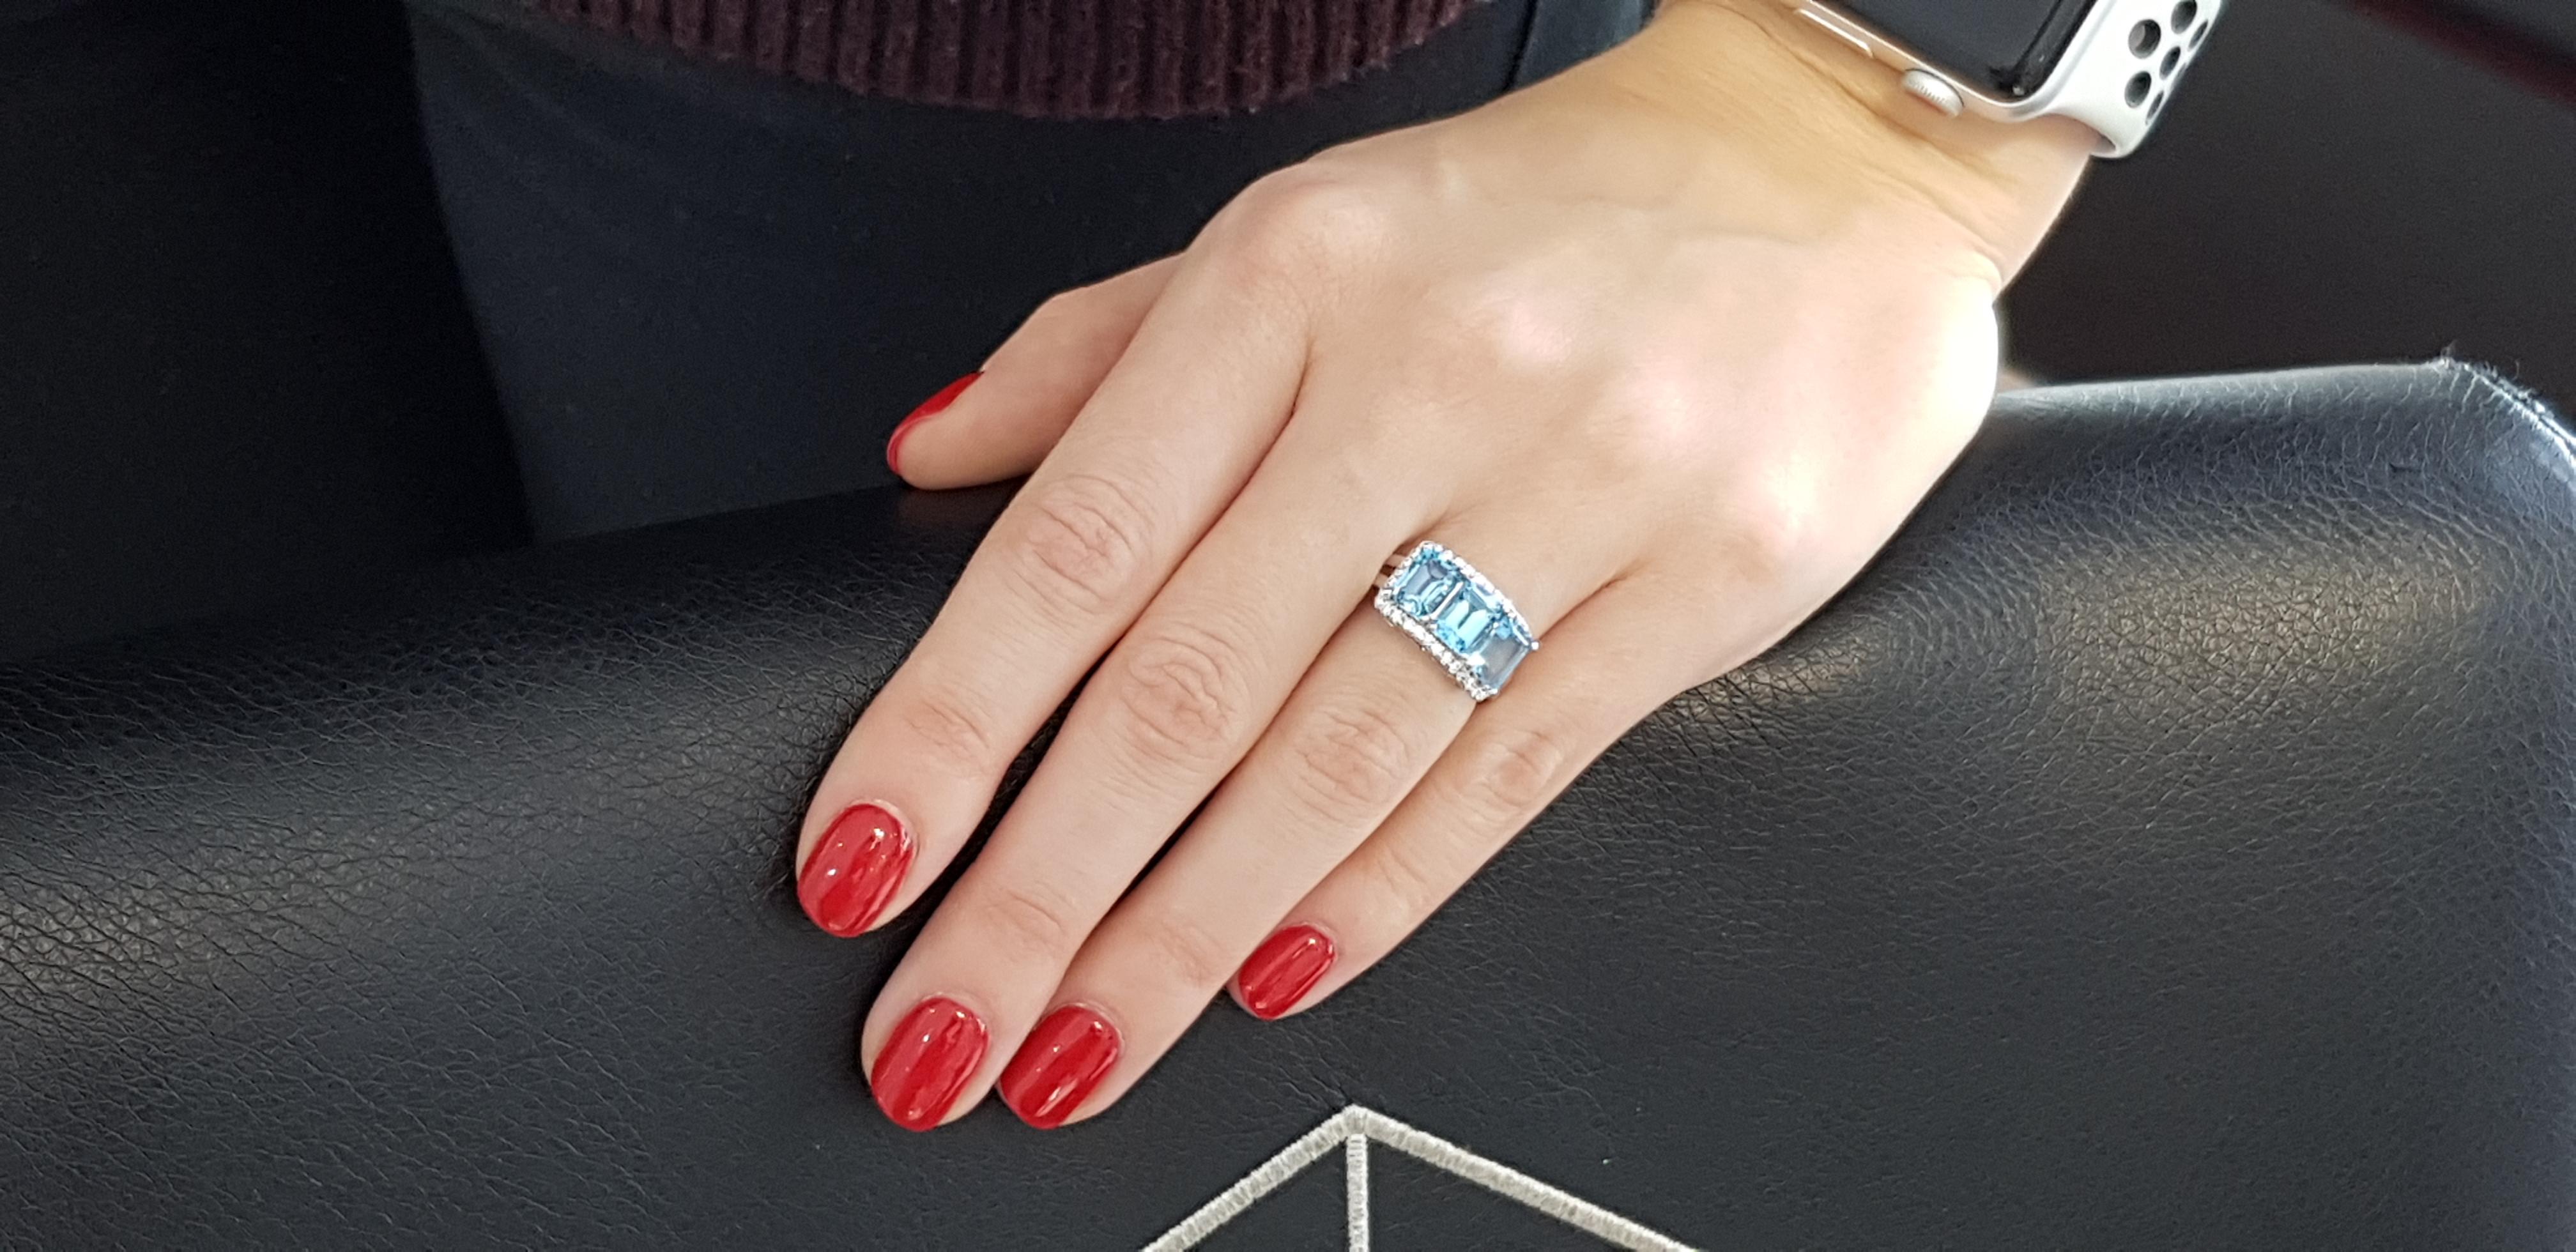 4.08 Carat Emerald Cut Blue Topaz Diamond Halo 18 KT White Gold Engagement Ring For Sale 2